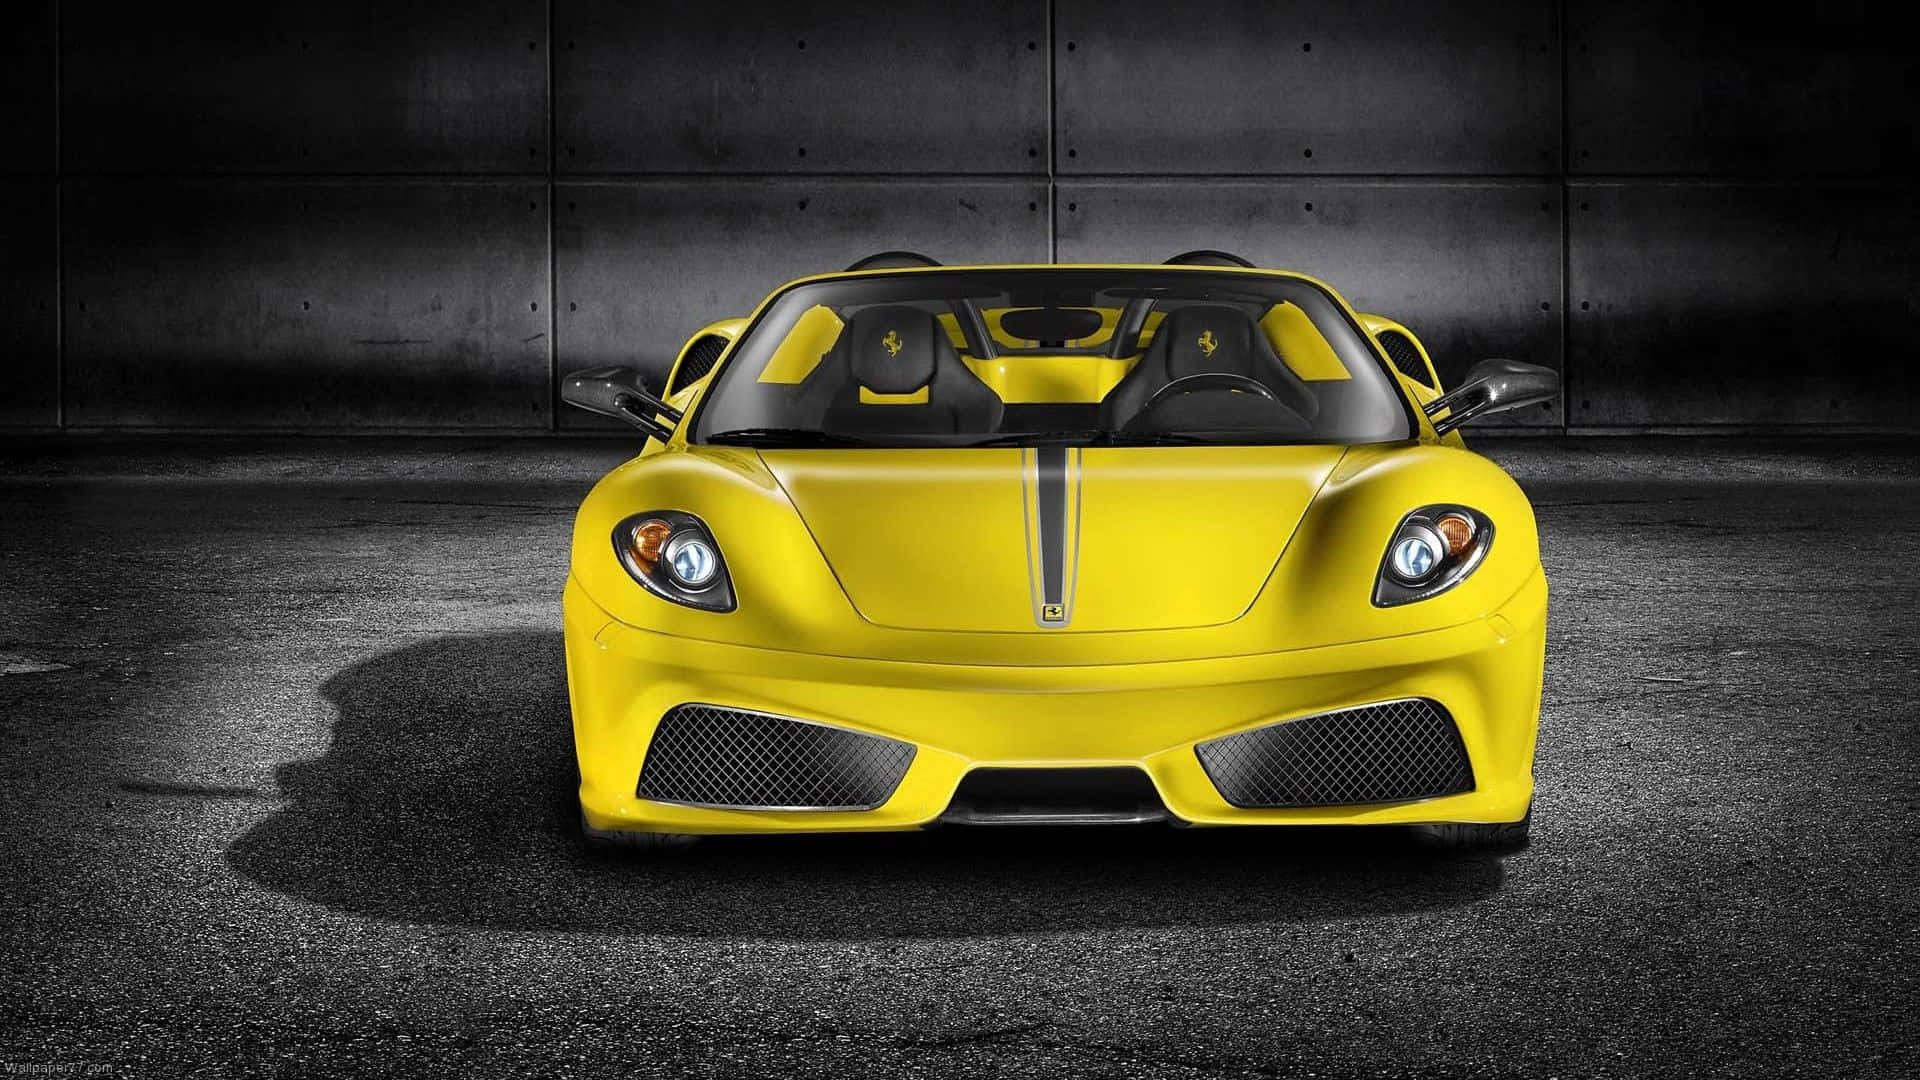 Captivating Yellow Sports Car Wallpaper